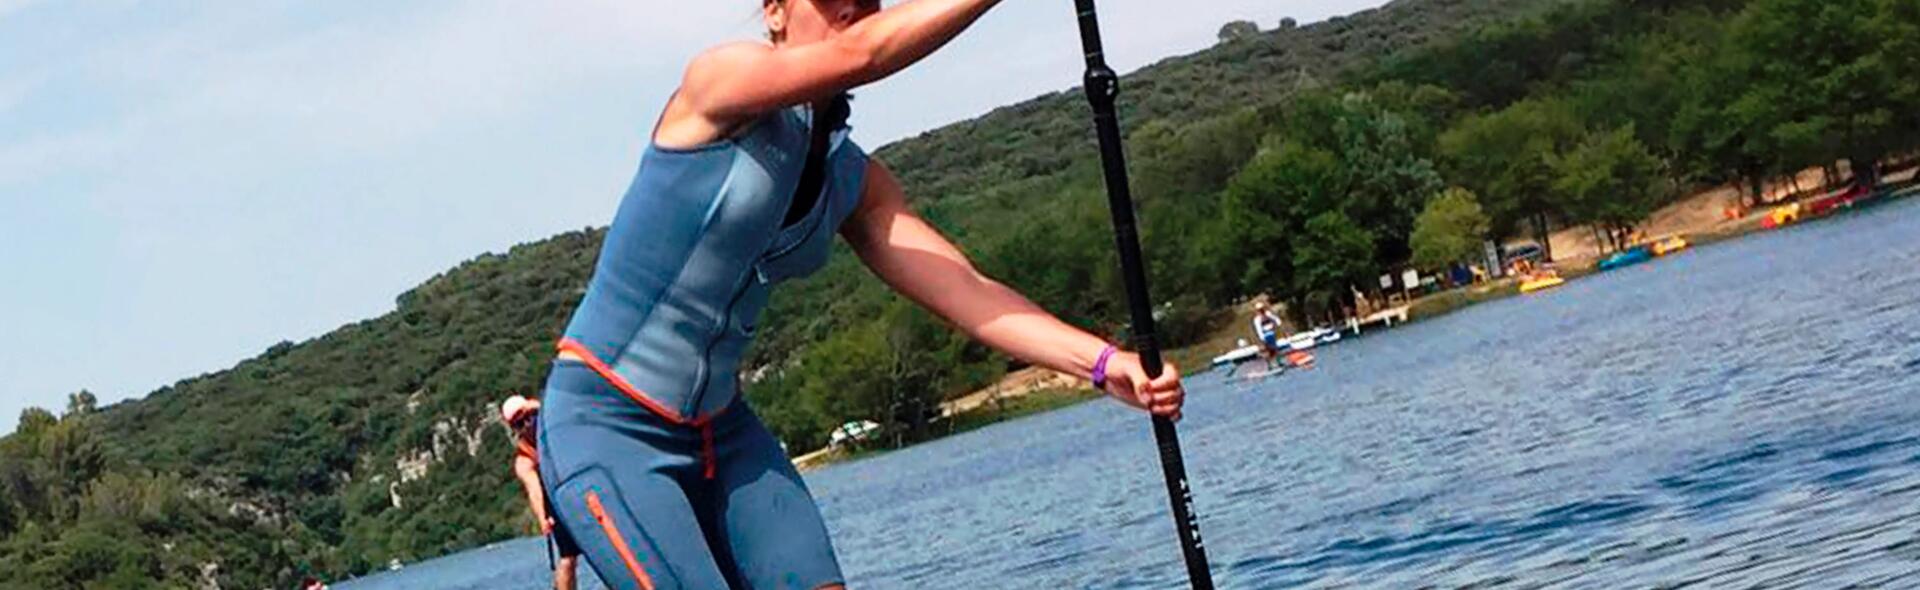 XBSXP Men's Split Surfing Trousers Thermal Diving Pants 1.5mm Neoprene,Women's  Winter Trunks Wetsuit Snorkeling Gear for Windsurfing Swimming Kayak  Motorboat,Female,S : Amazon.co.uk: Sports & Outdoors